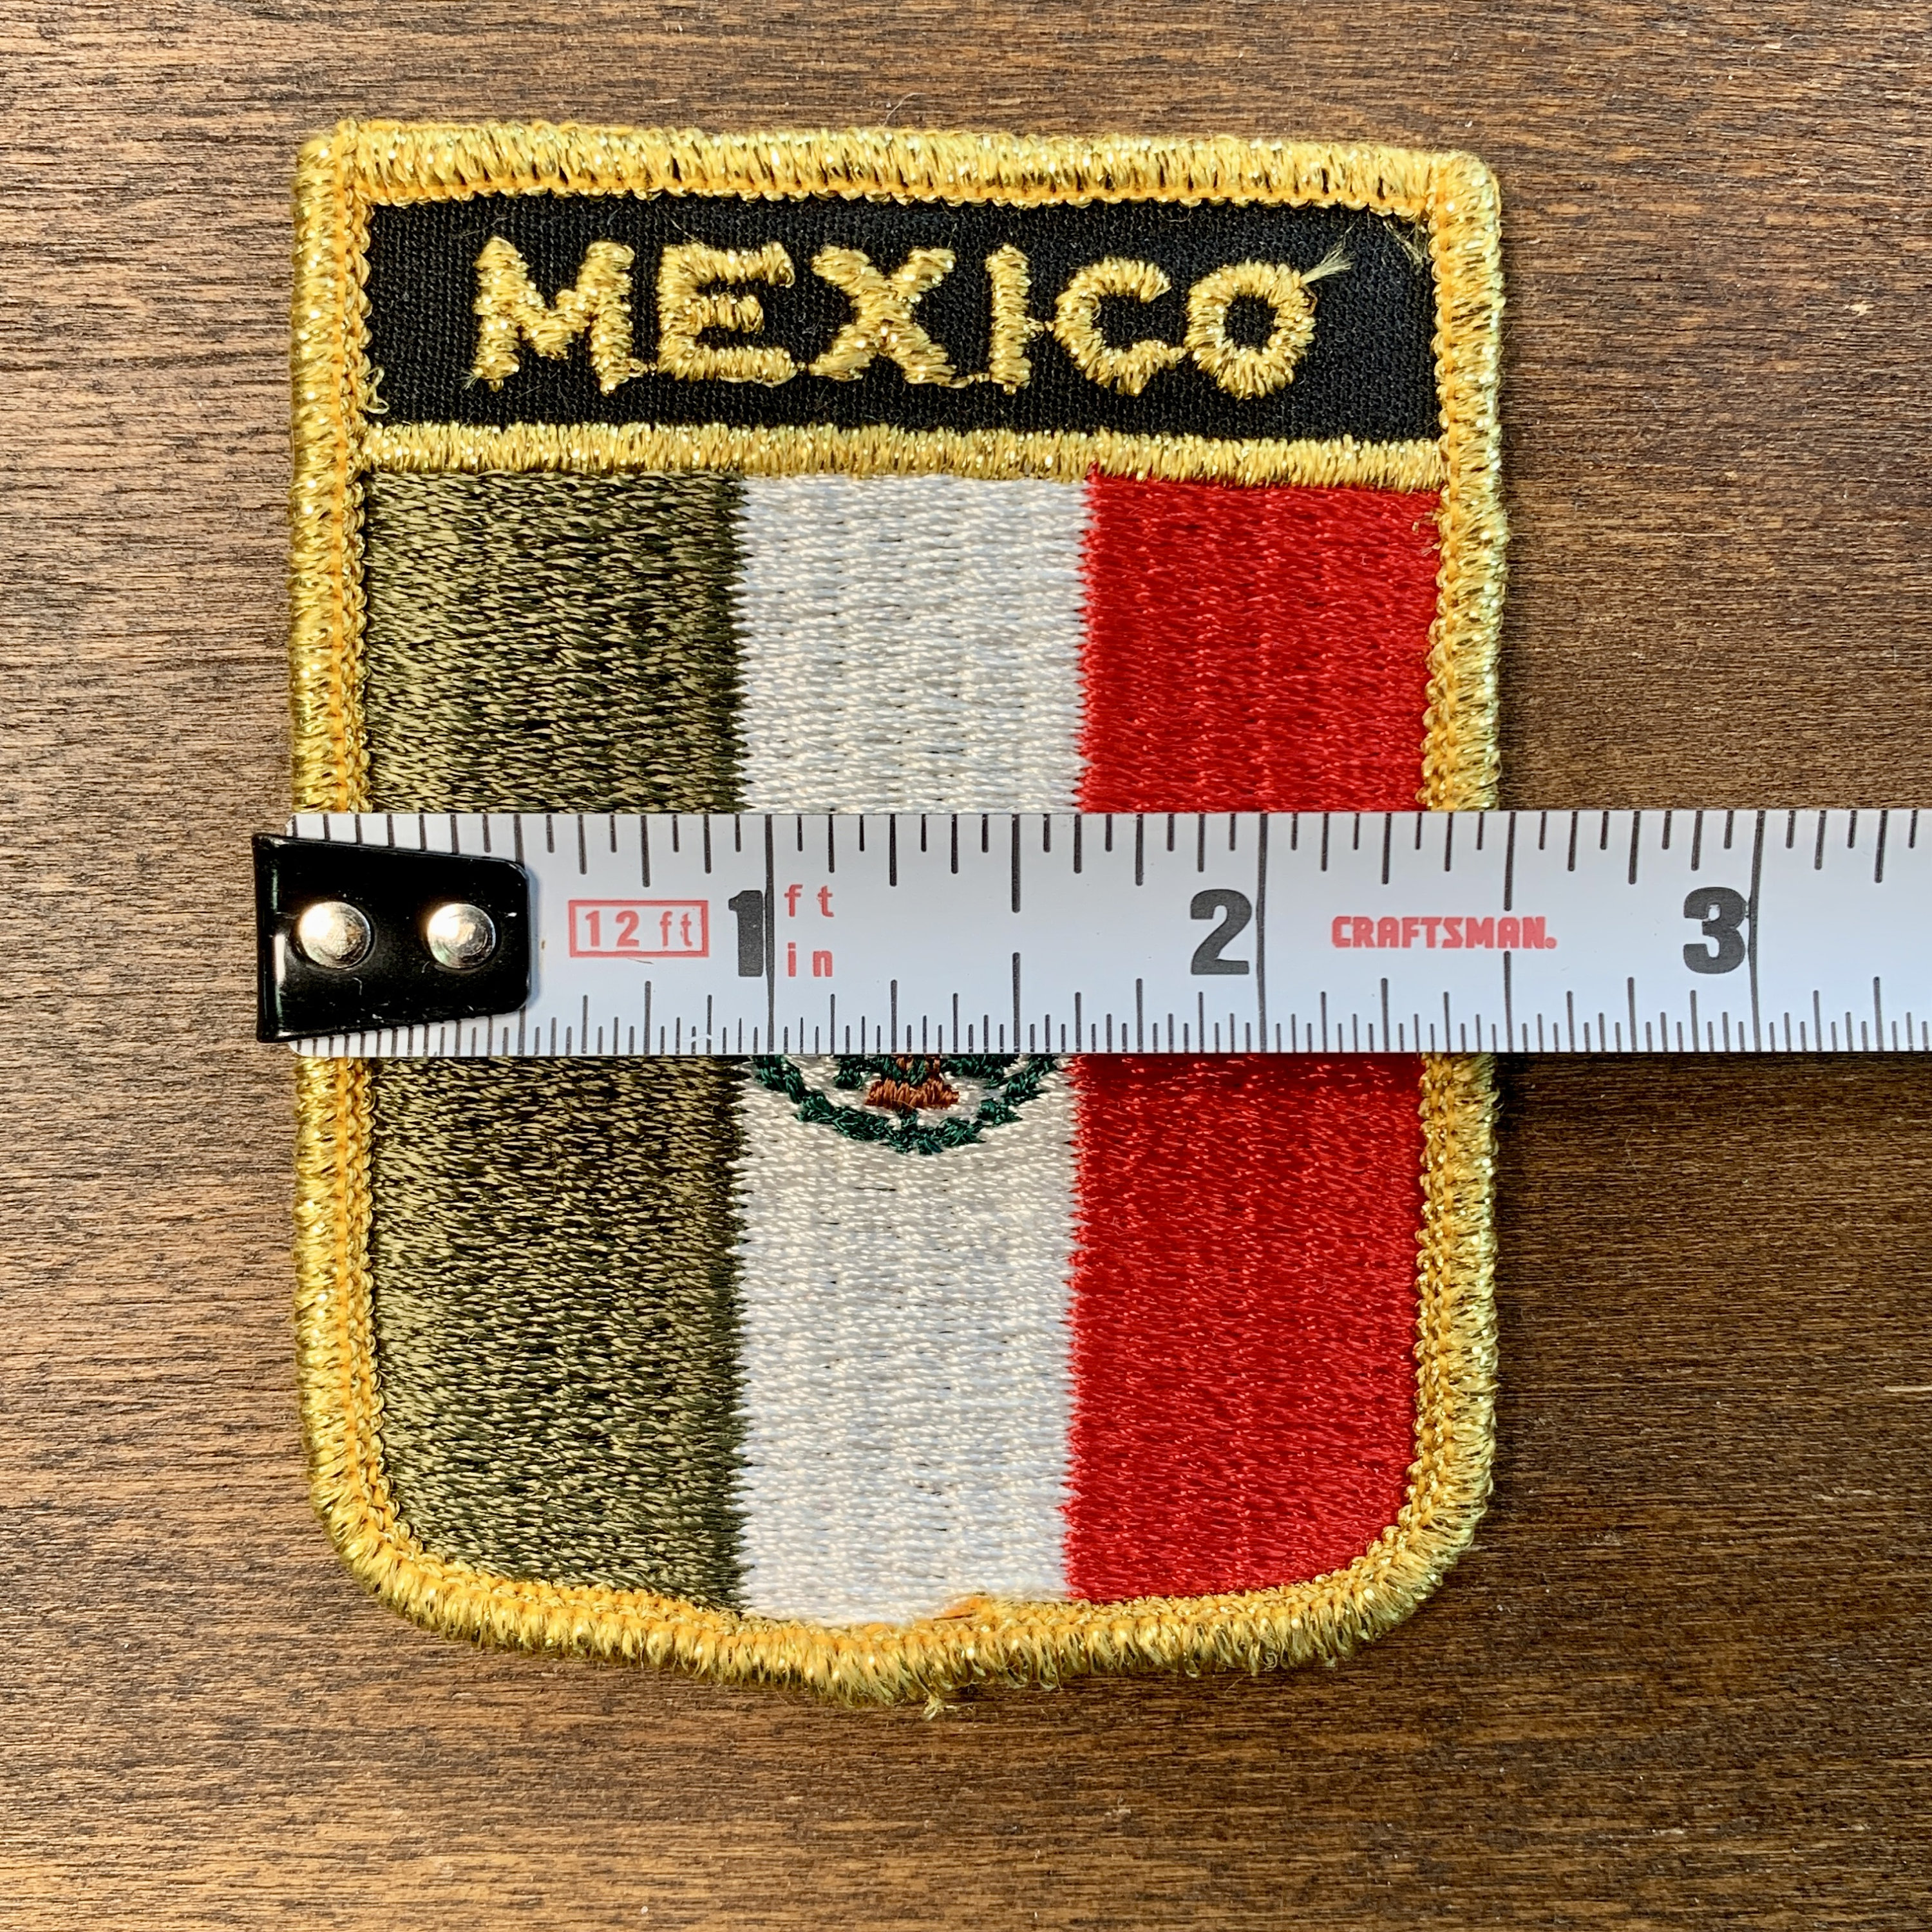 Mexico Flag Vintage Travel Souvenir Patch by Holm Patches